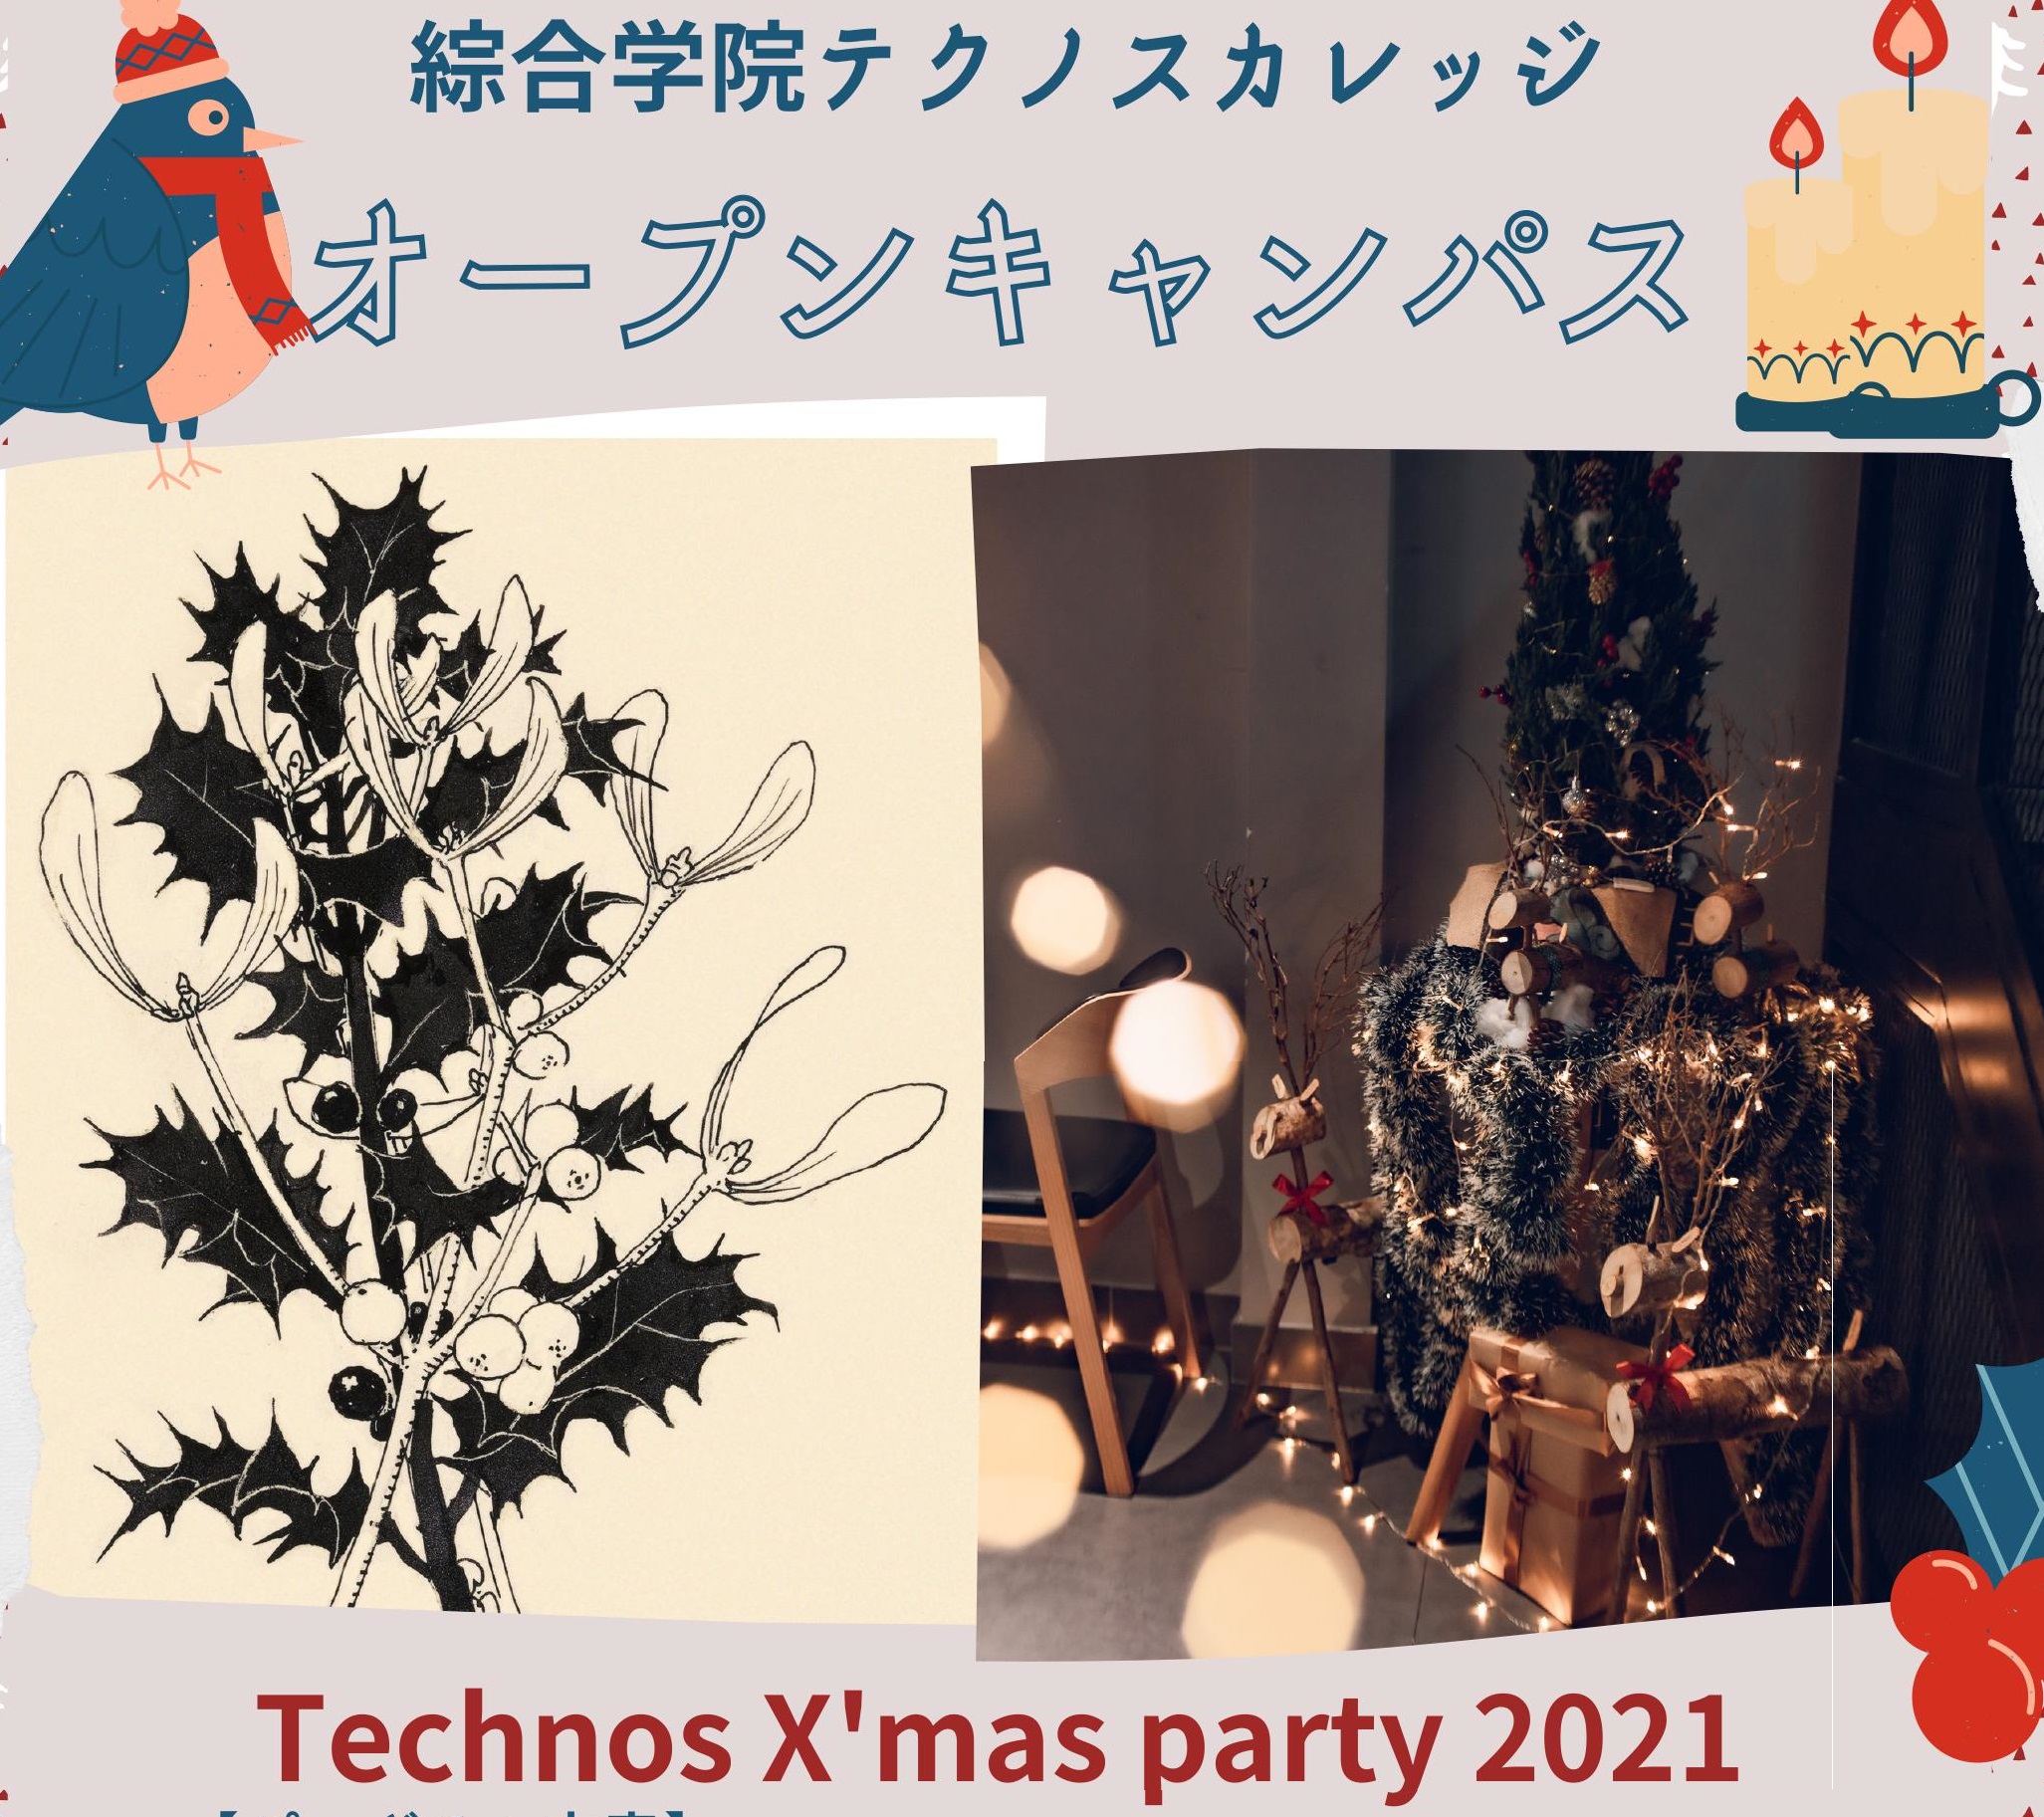 Technos X’mas Party 2021 クリスマスオープンキャンパスのご案内